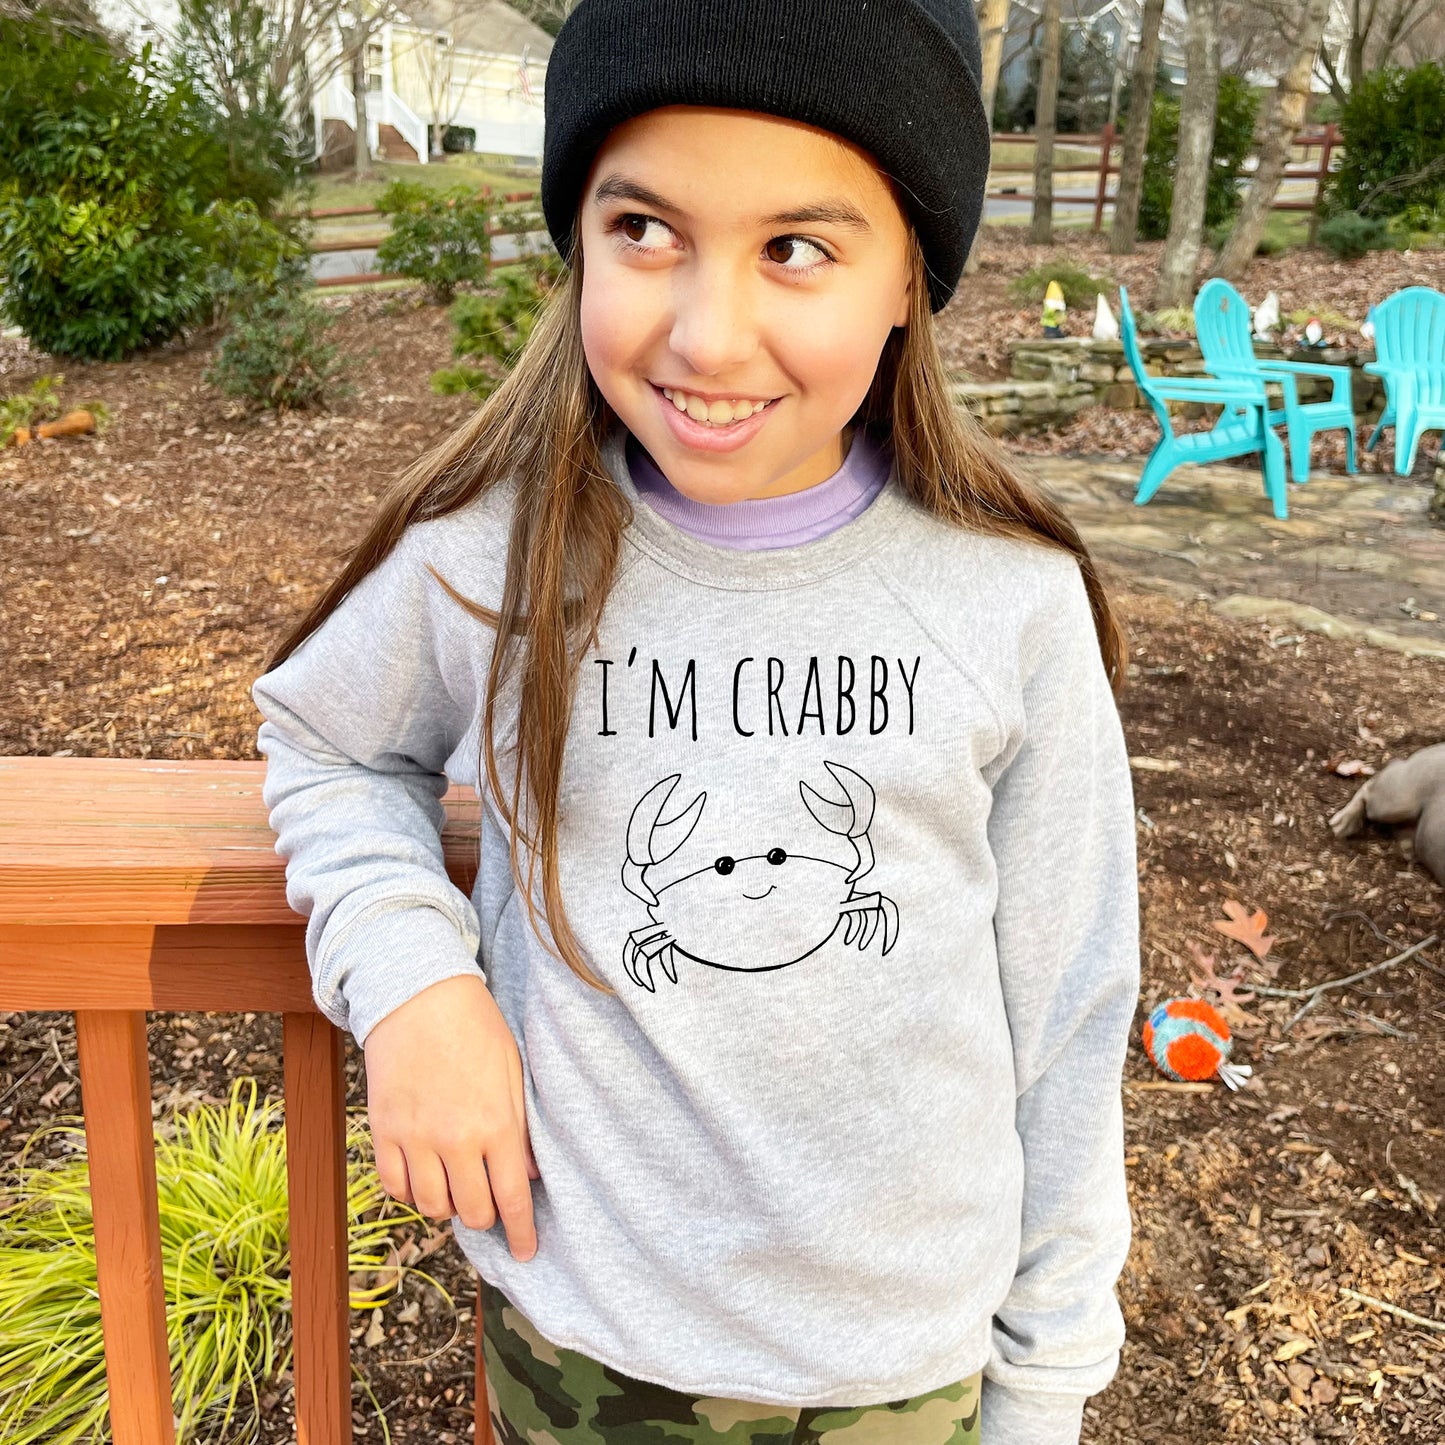 I'm Crabby - Kid's Sweatshirt - Heather Gray or Mauve